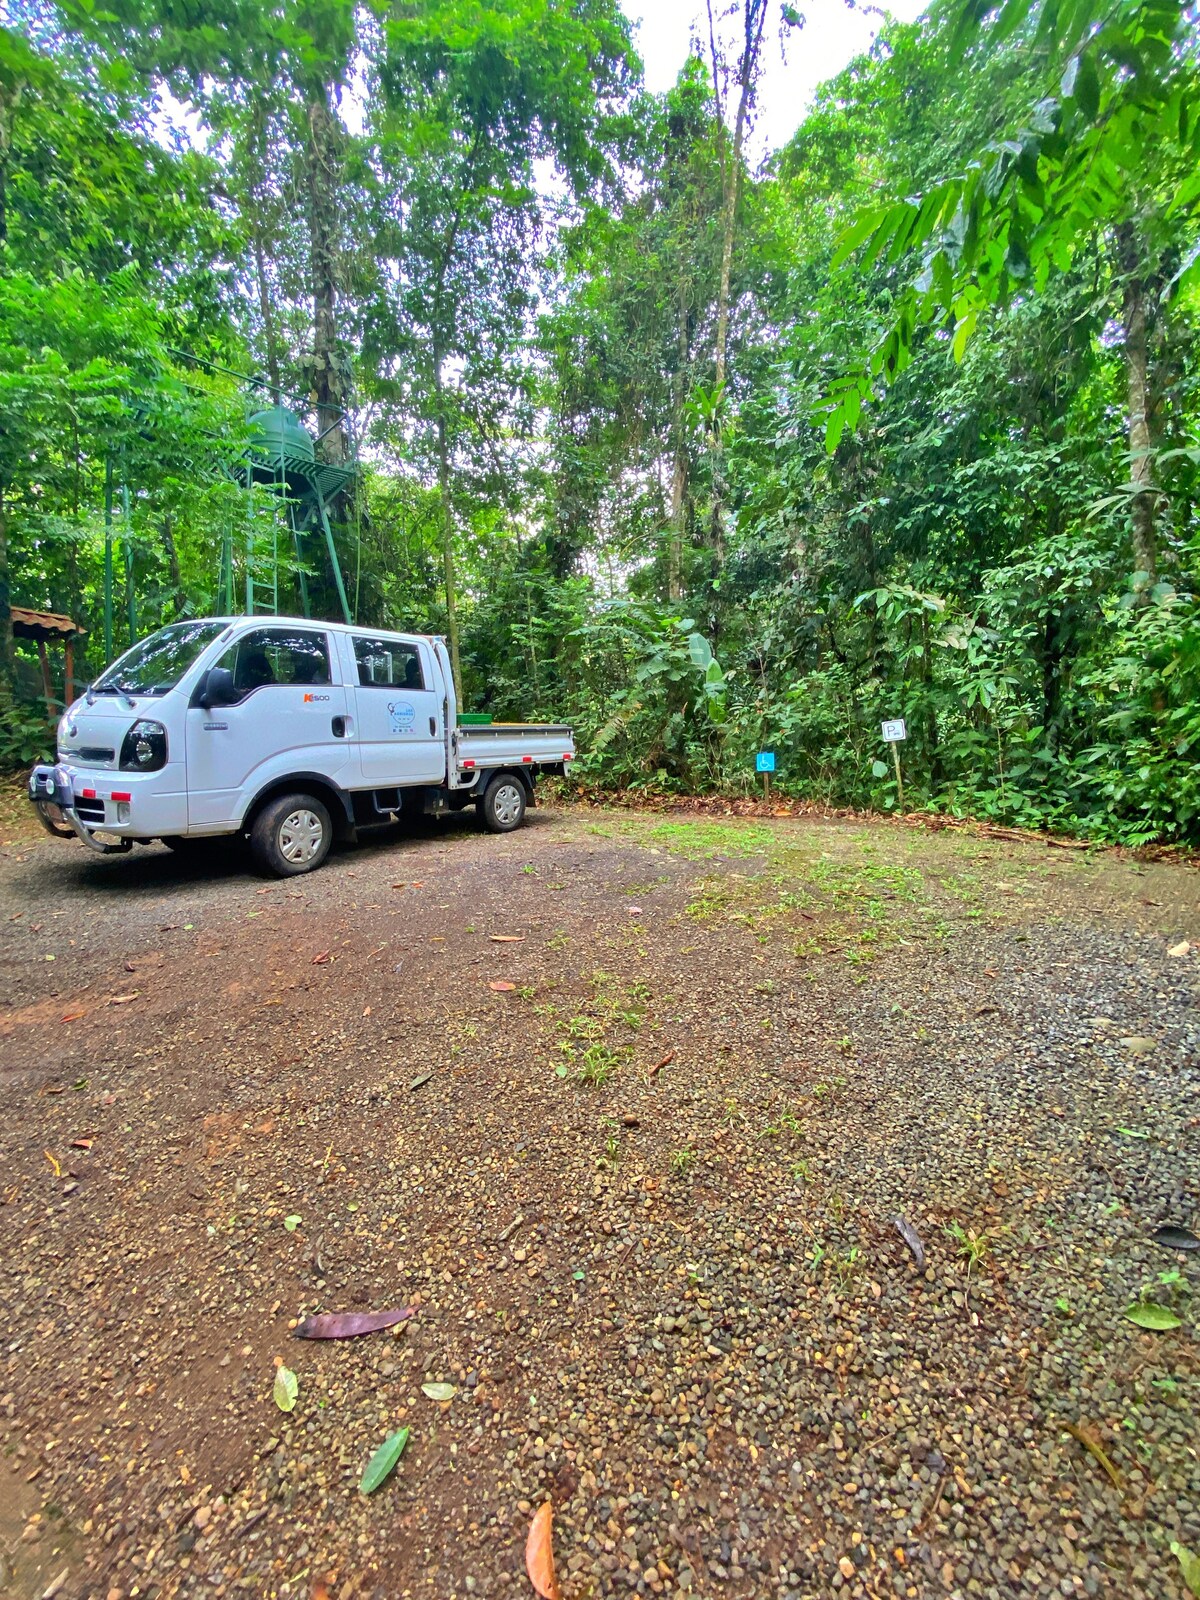 Jungle Cabin: Tropical Retreat!